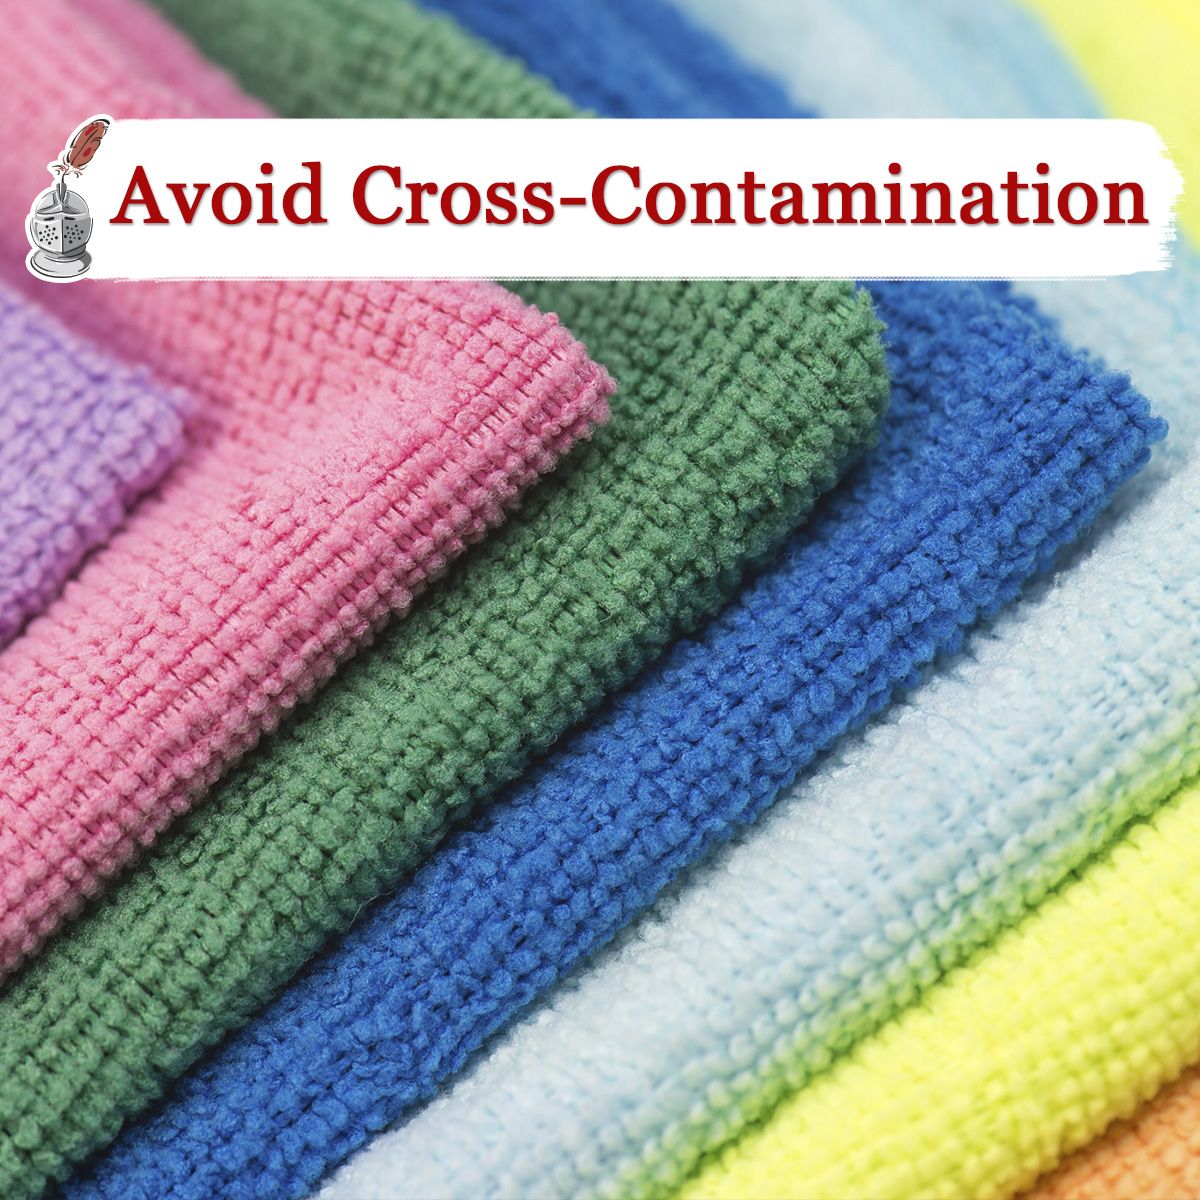 Avoid Cross-Contamination